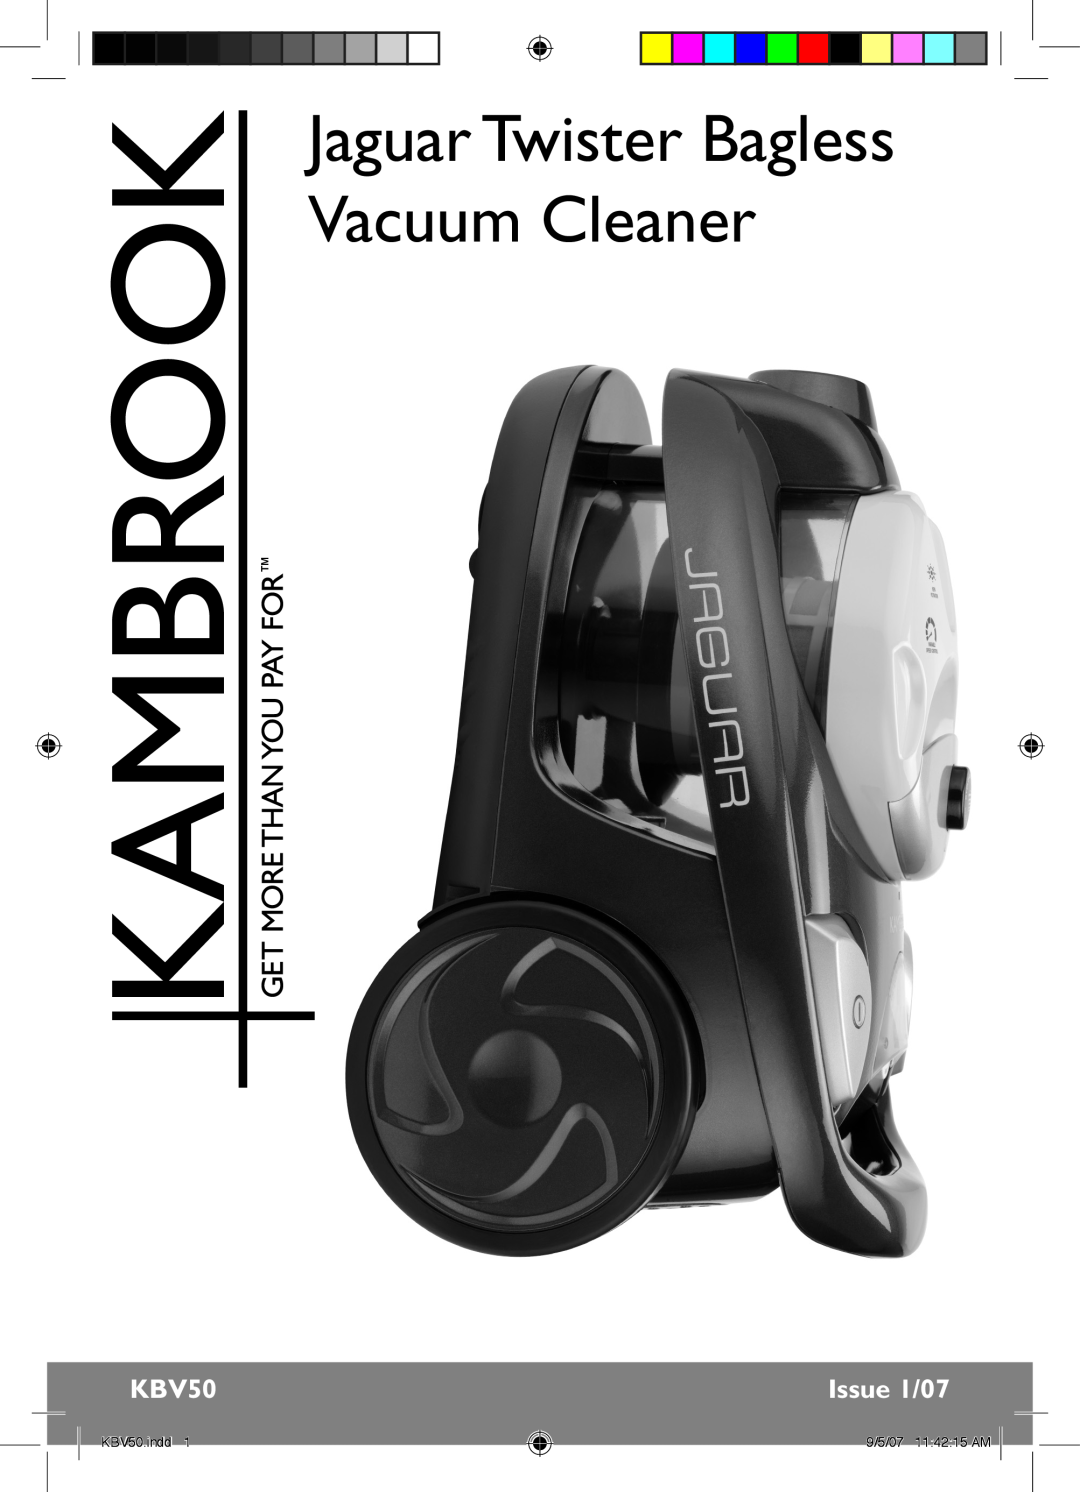 Kambrook manual Jaguar Twister, Bagless Vacuum, Advanced, 1800W, Performance, KBV50/KBV580, KBV580 IB V3.indd 